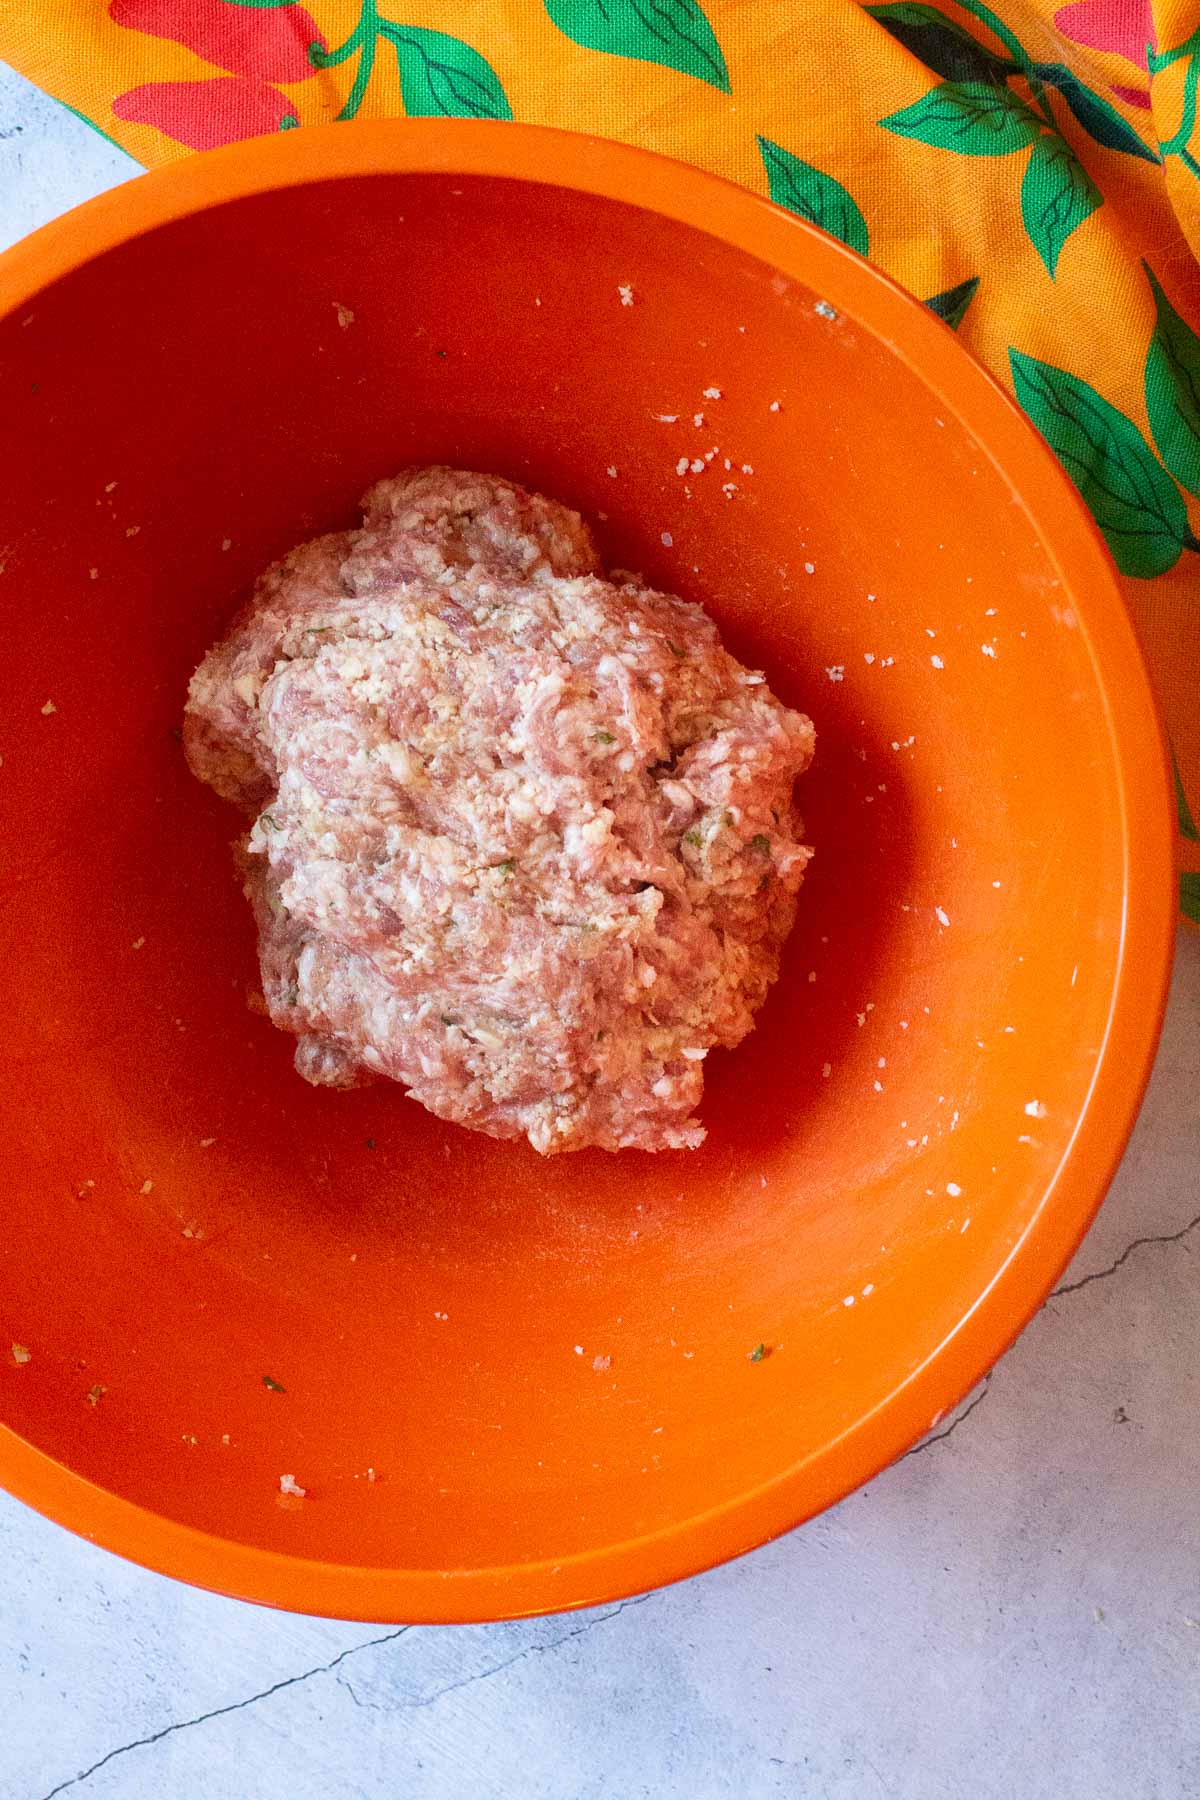 Mixing ground pork with seasonings to make pork meatballs.